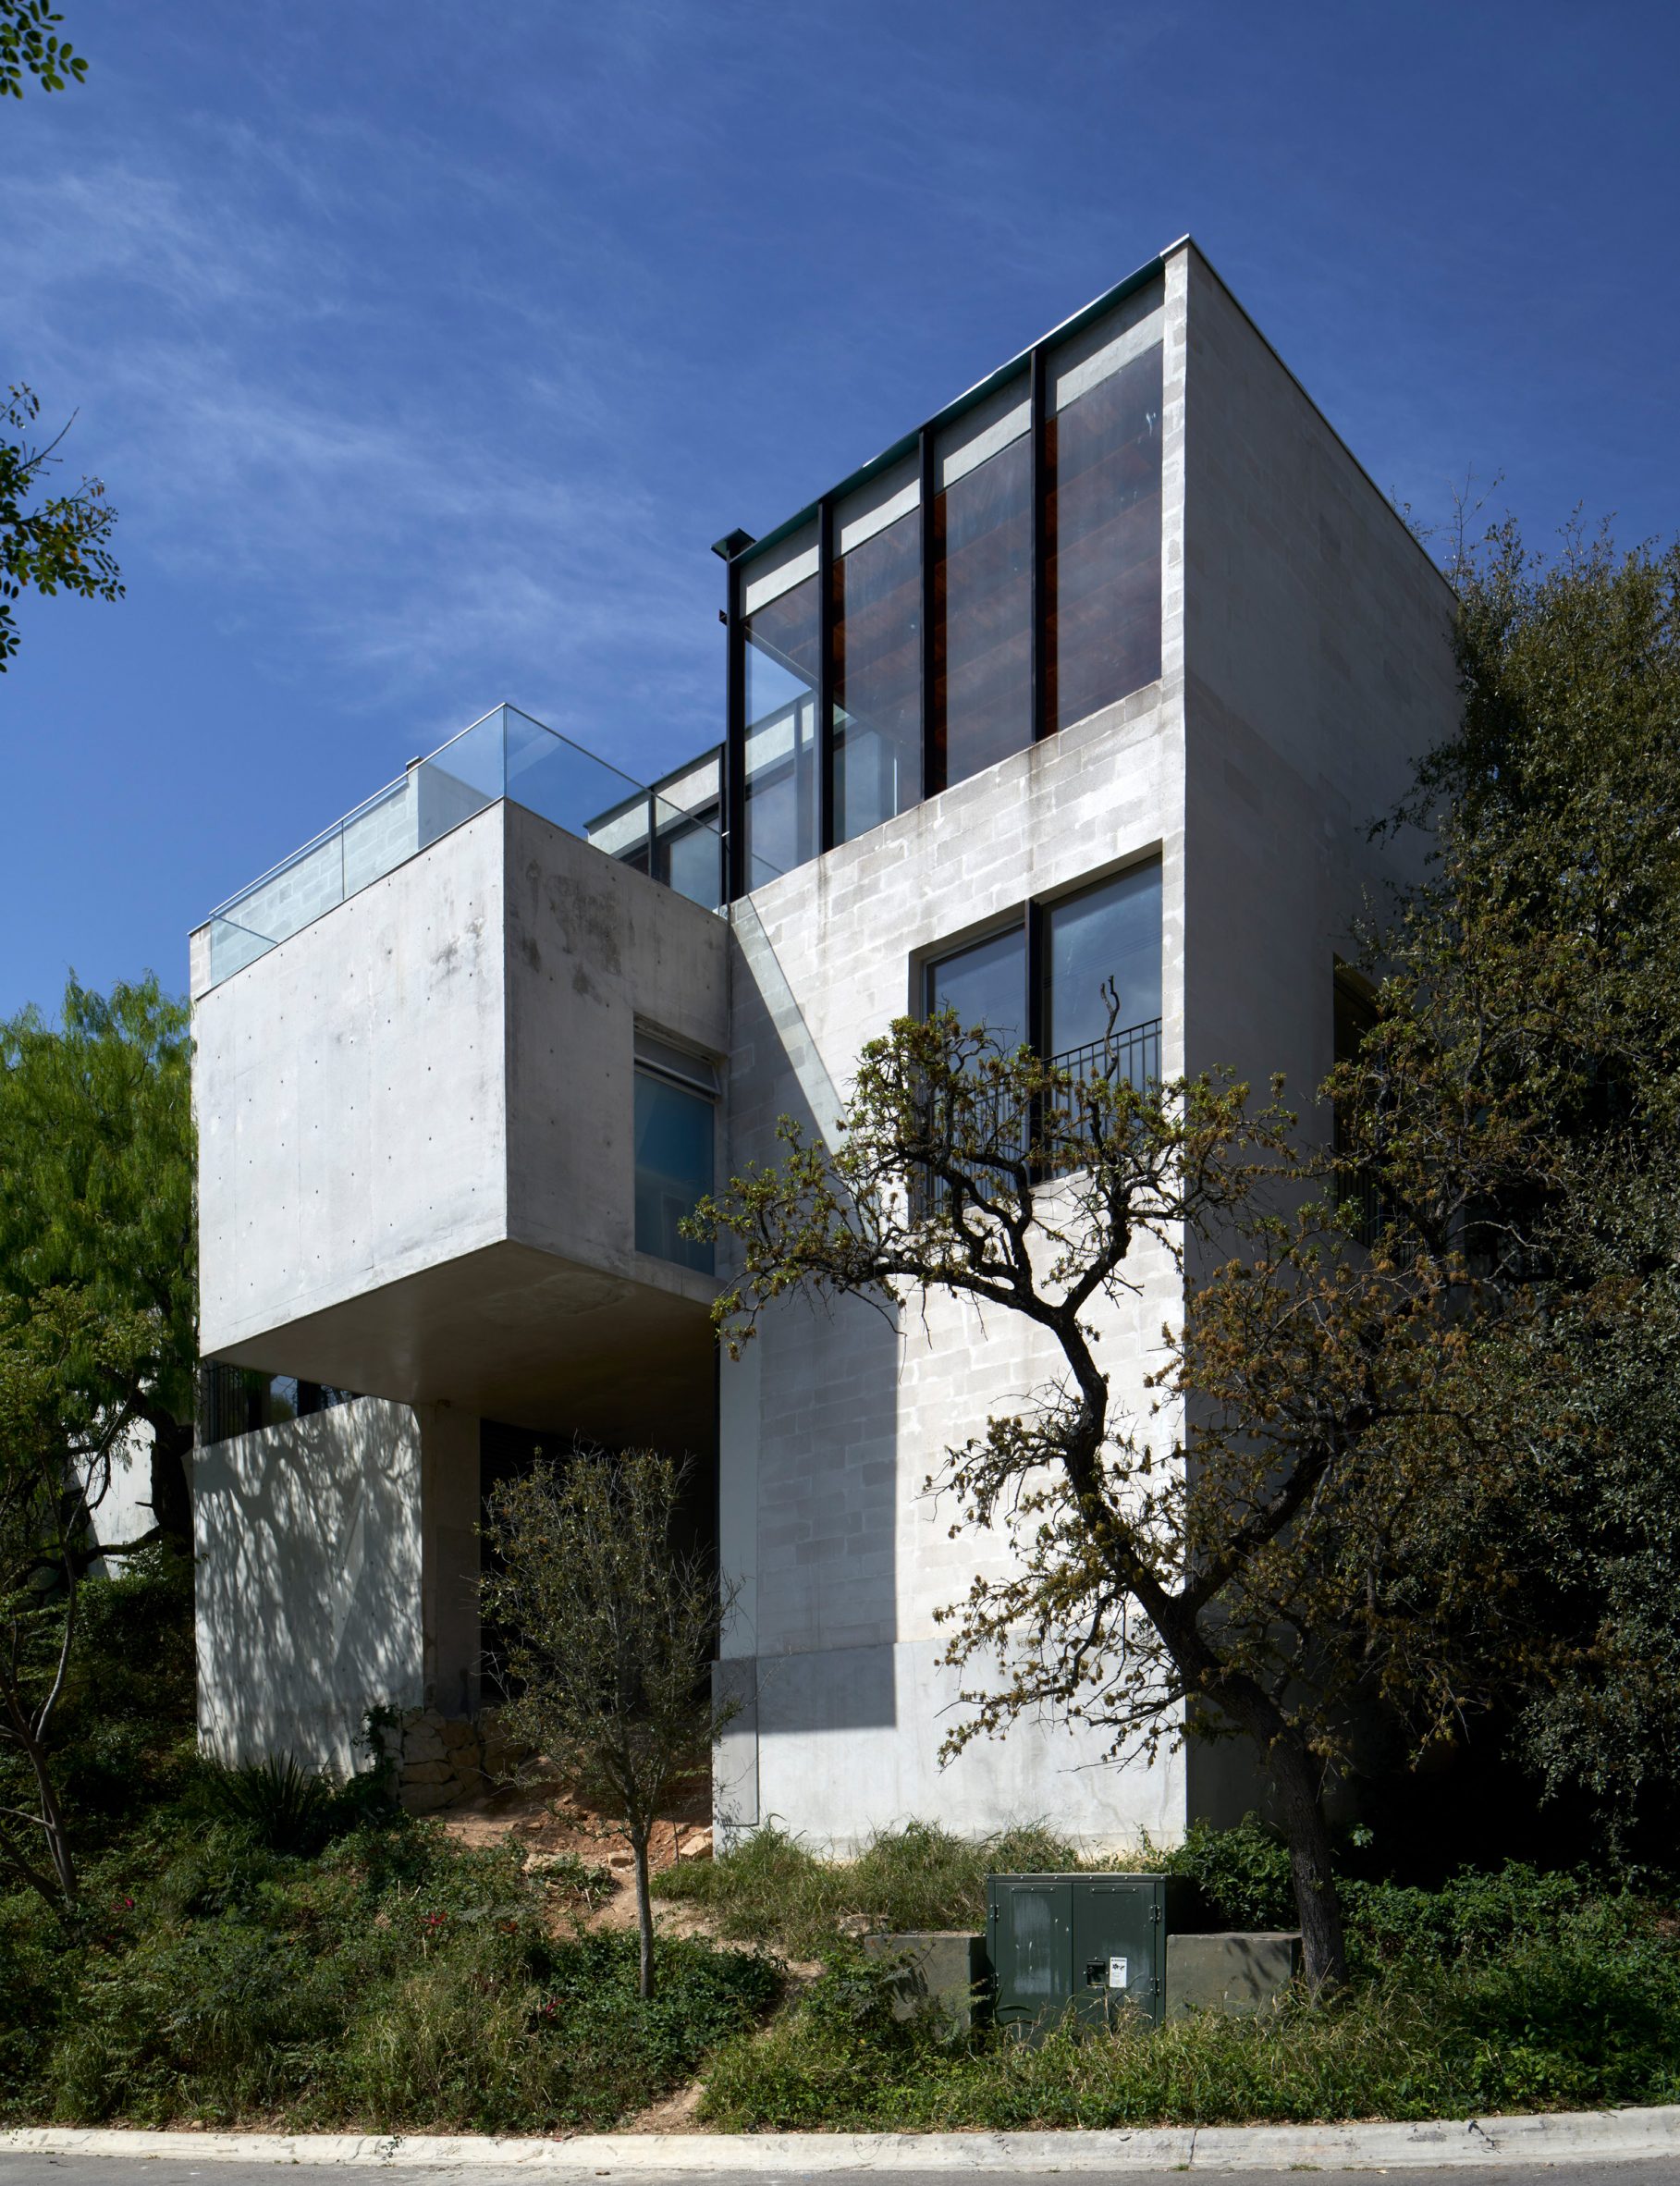 The exterior of an angular house